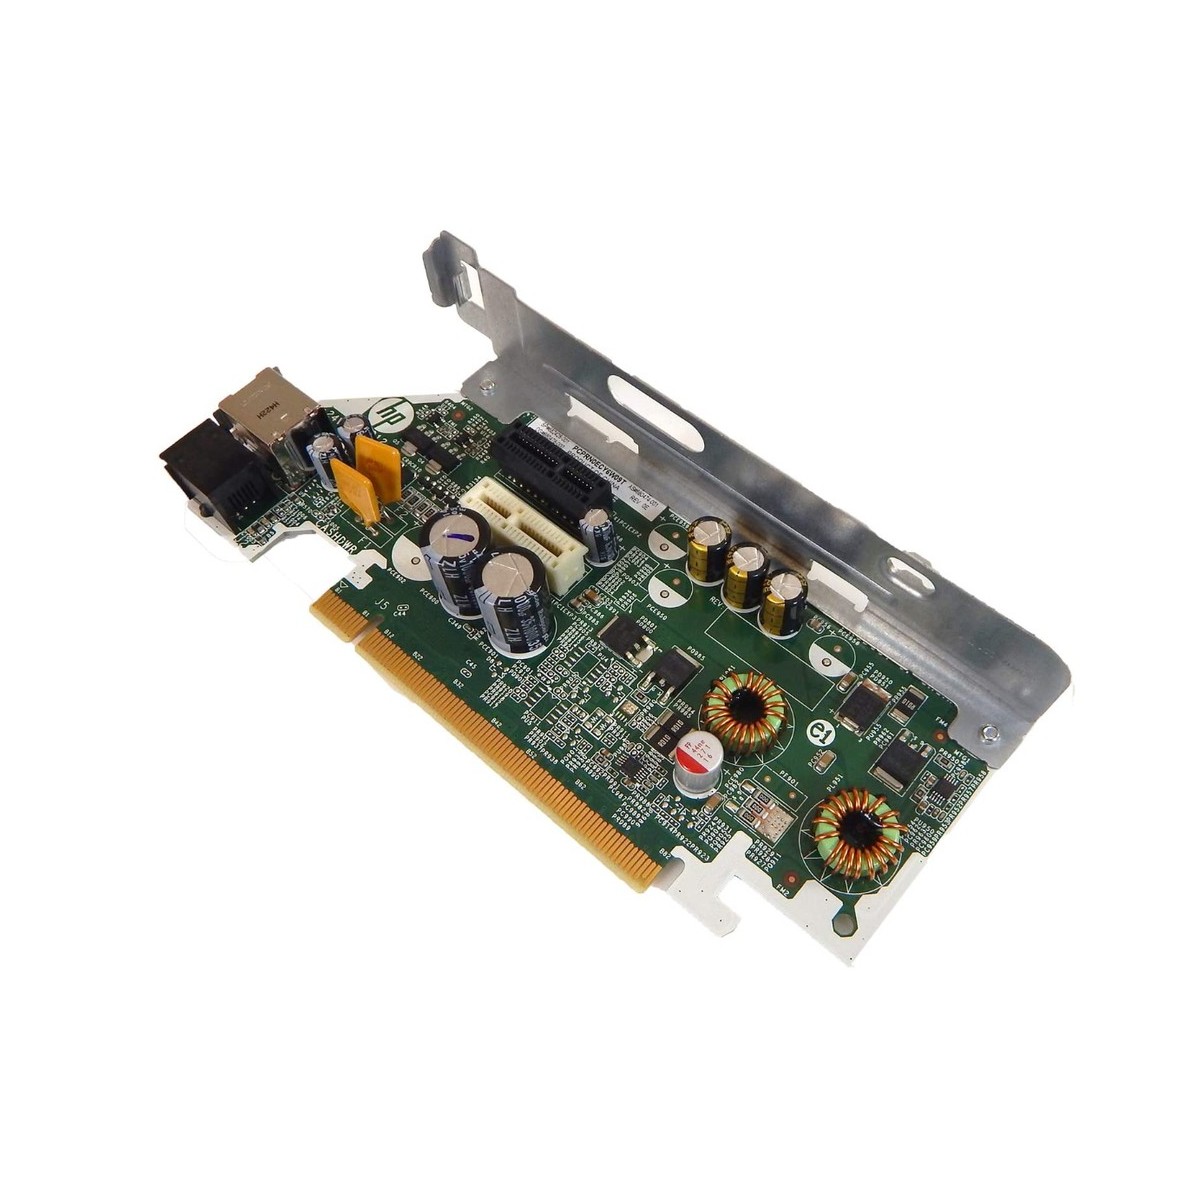 RISER CARD ULTRA SLIM HP RP3 3100 PCIe 680474-001